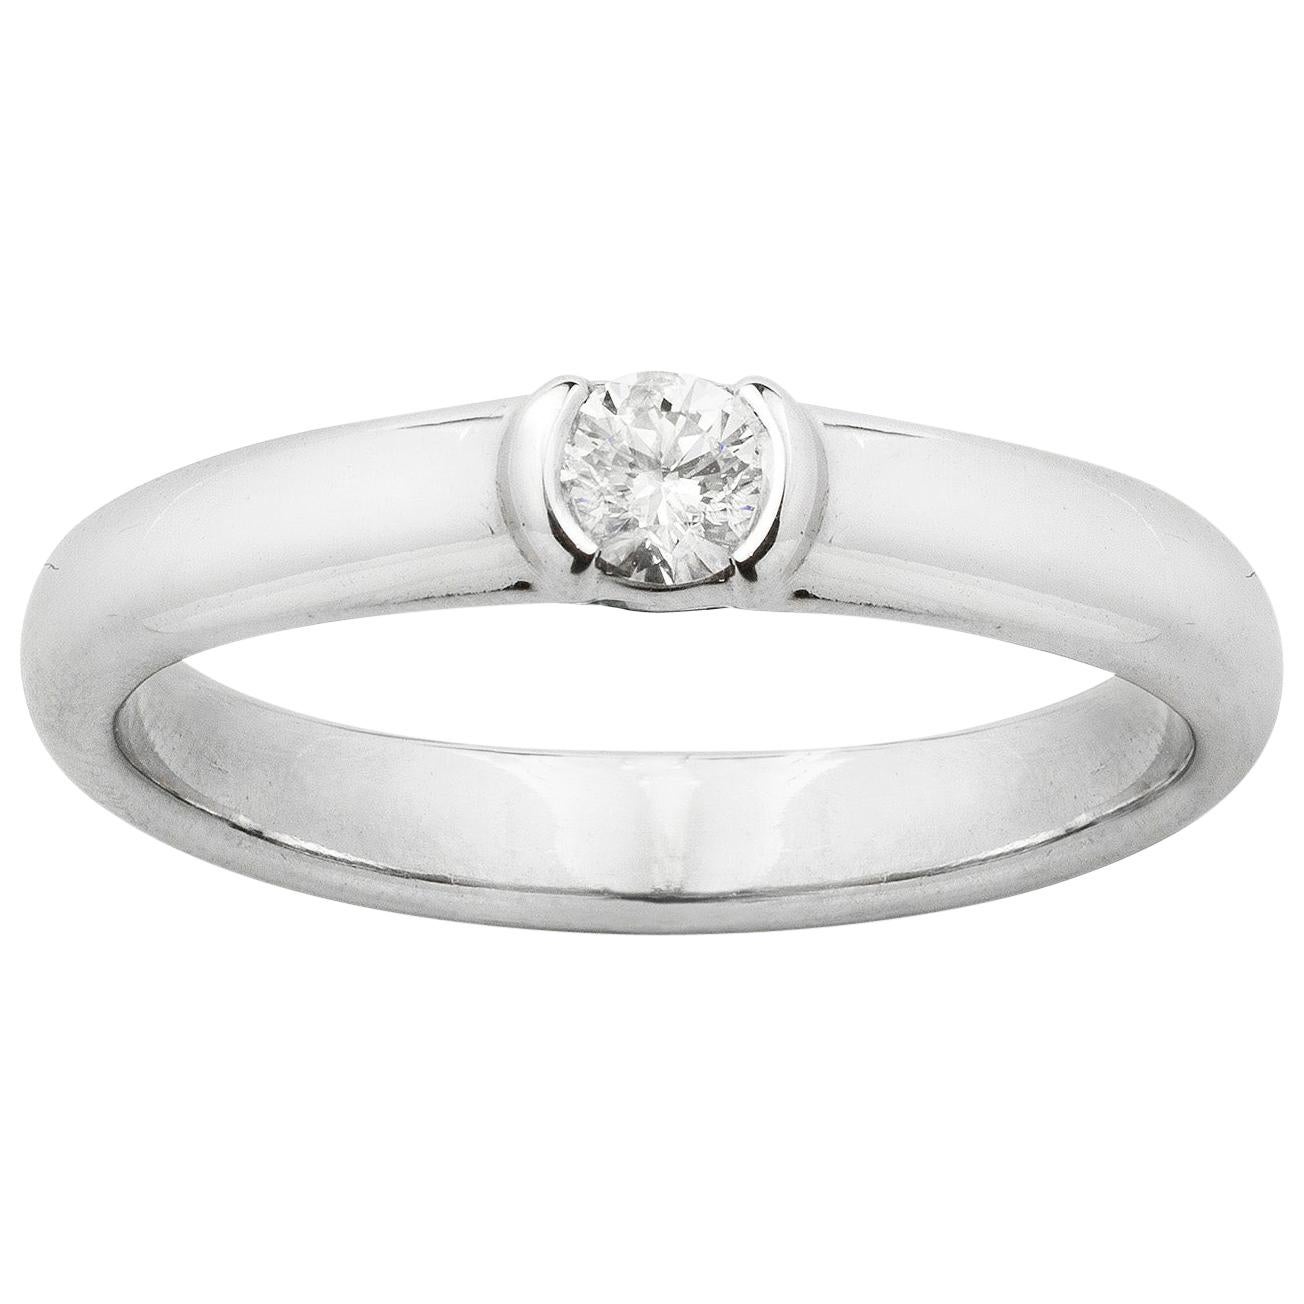 Tiffany & Co. Round Brilliant-Cut Single Stone Diamond Ring